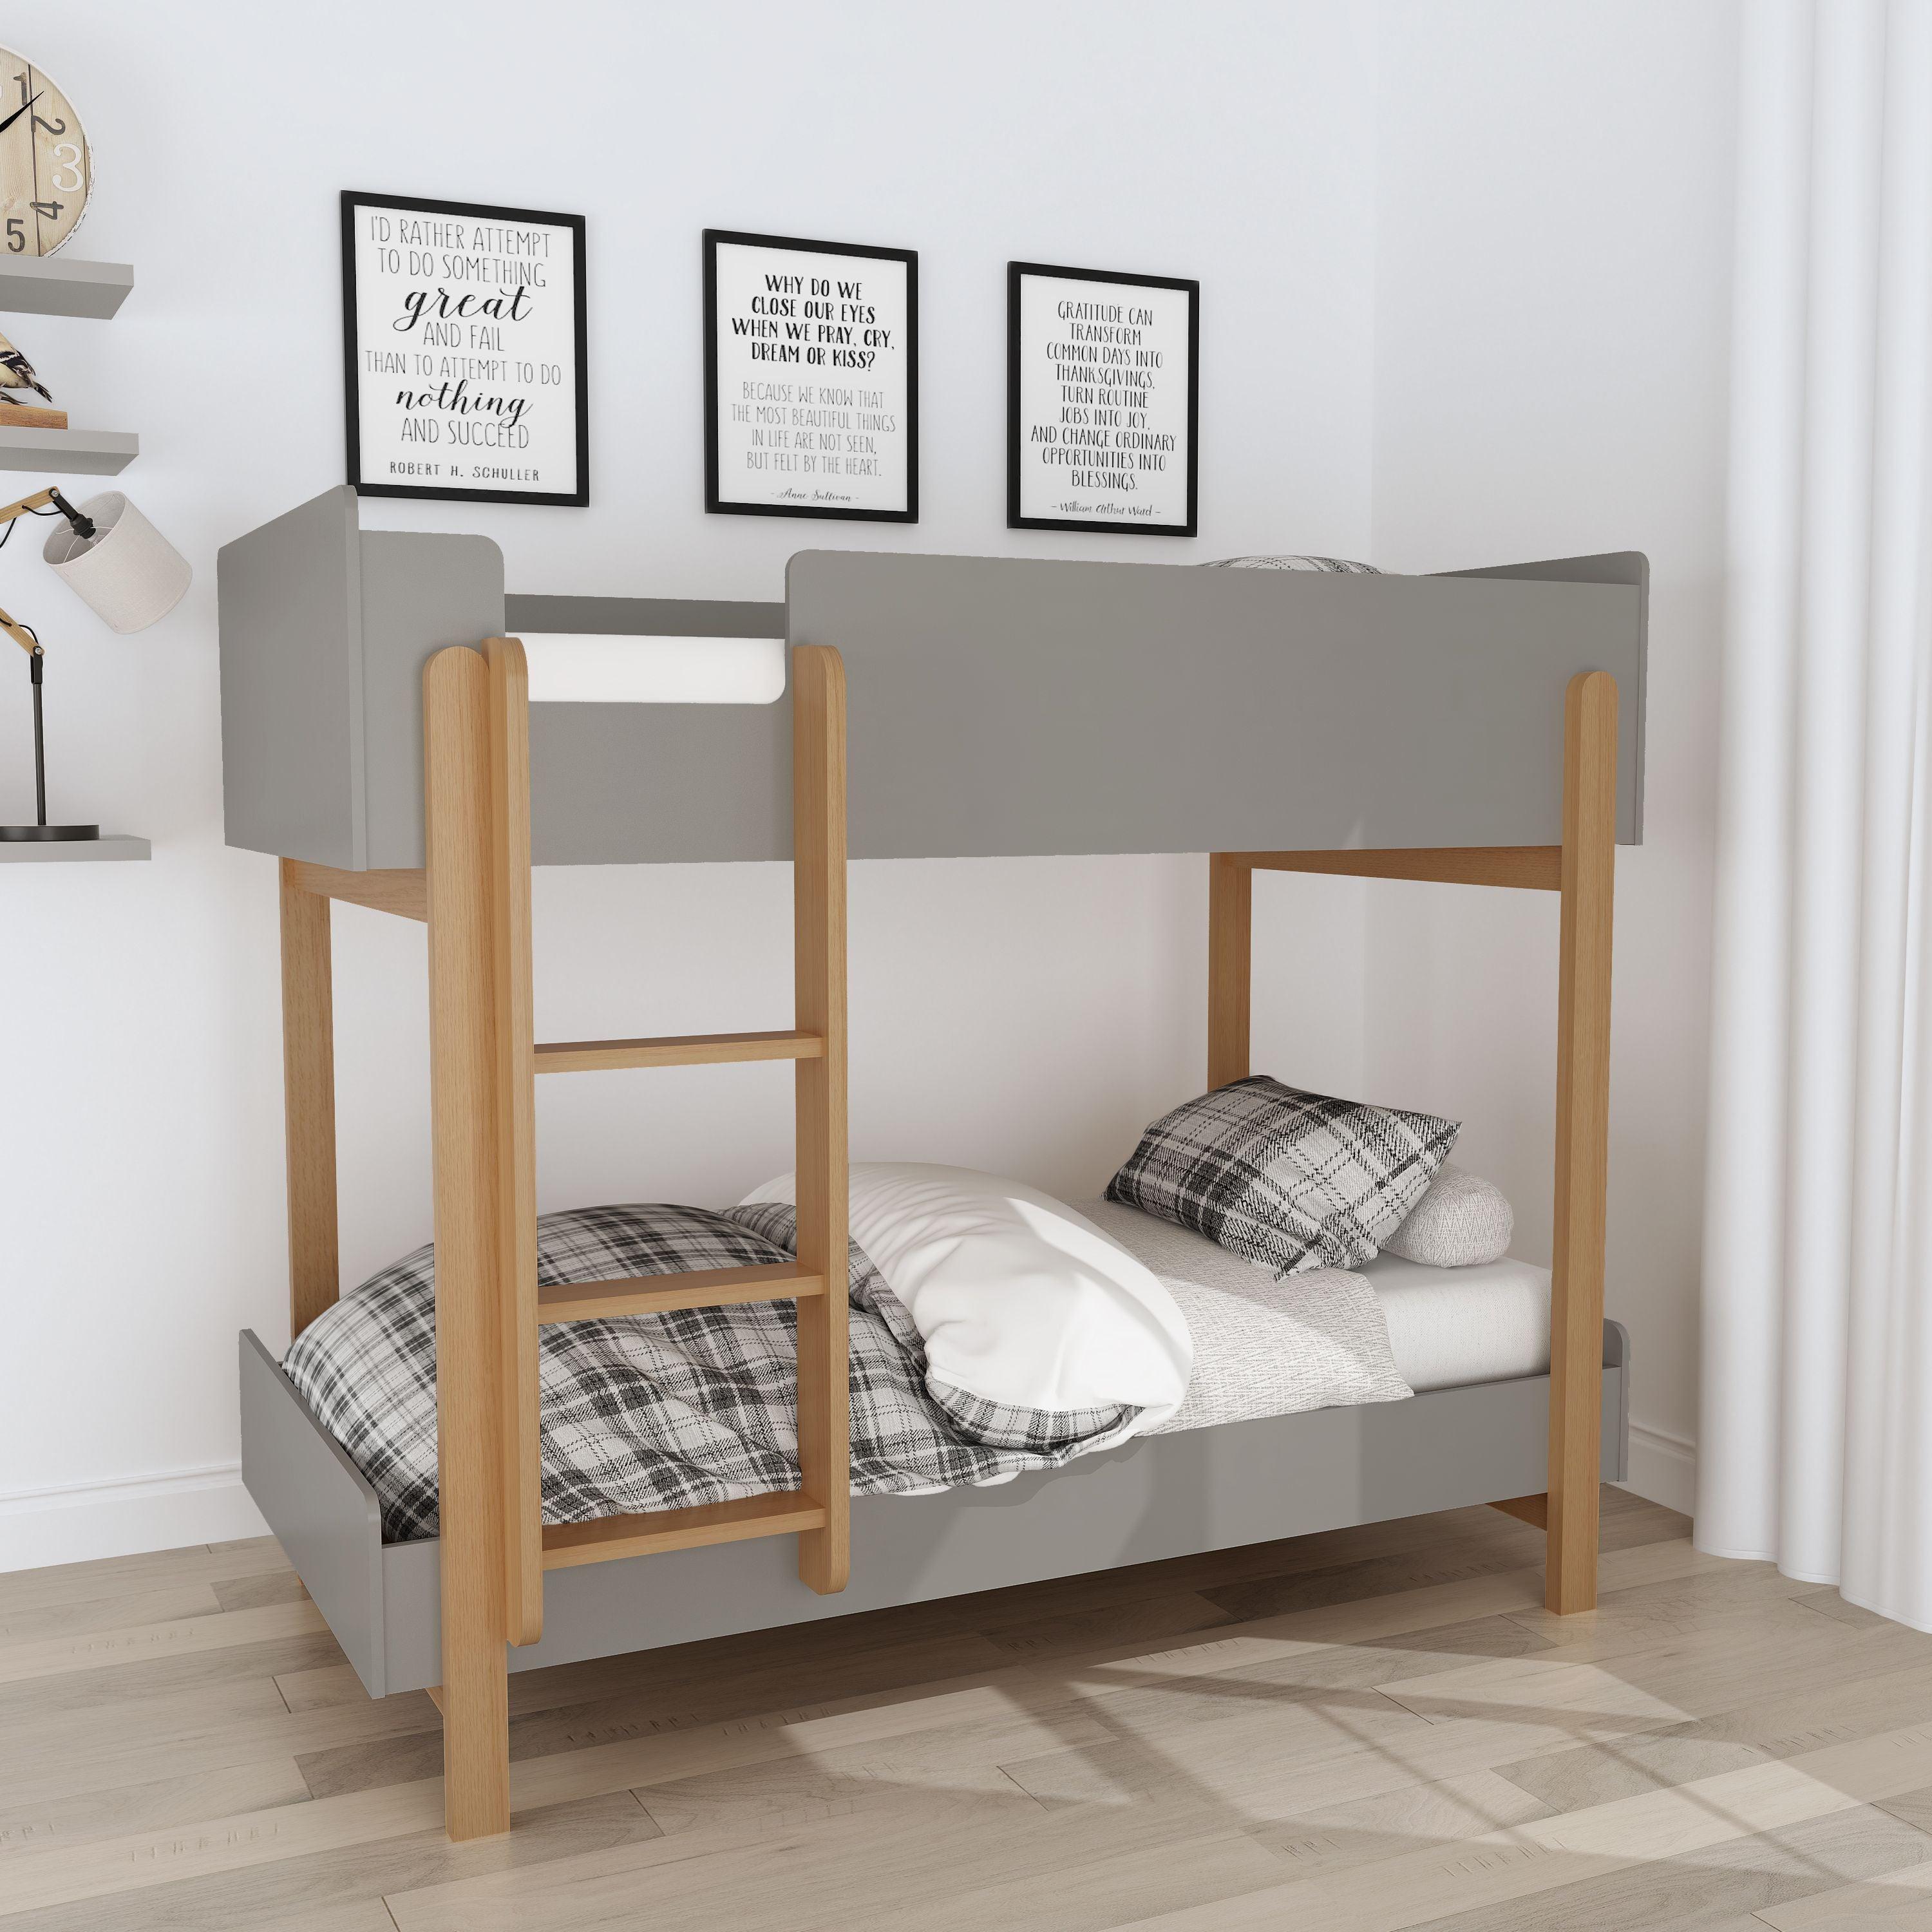 hero oak grey wood bunk bed frame 3'